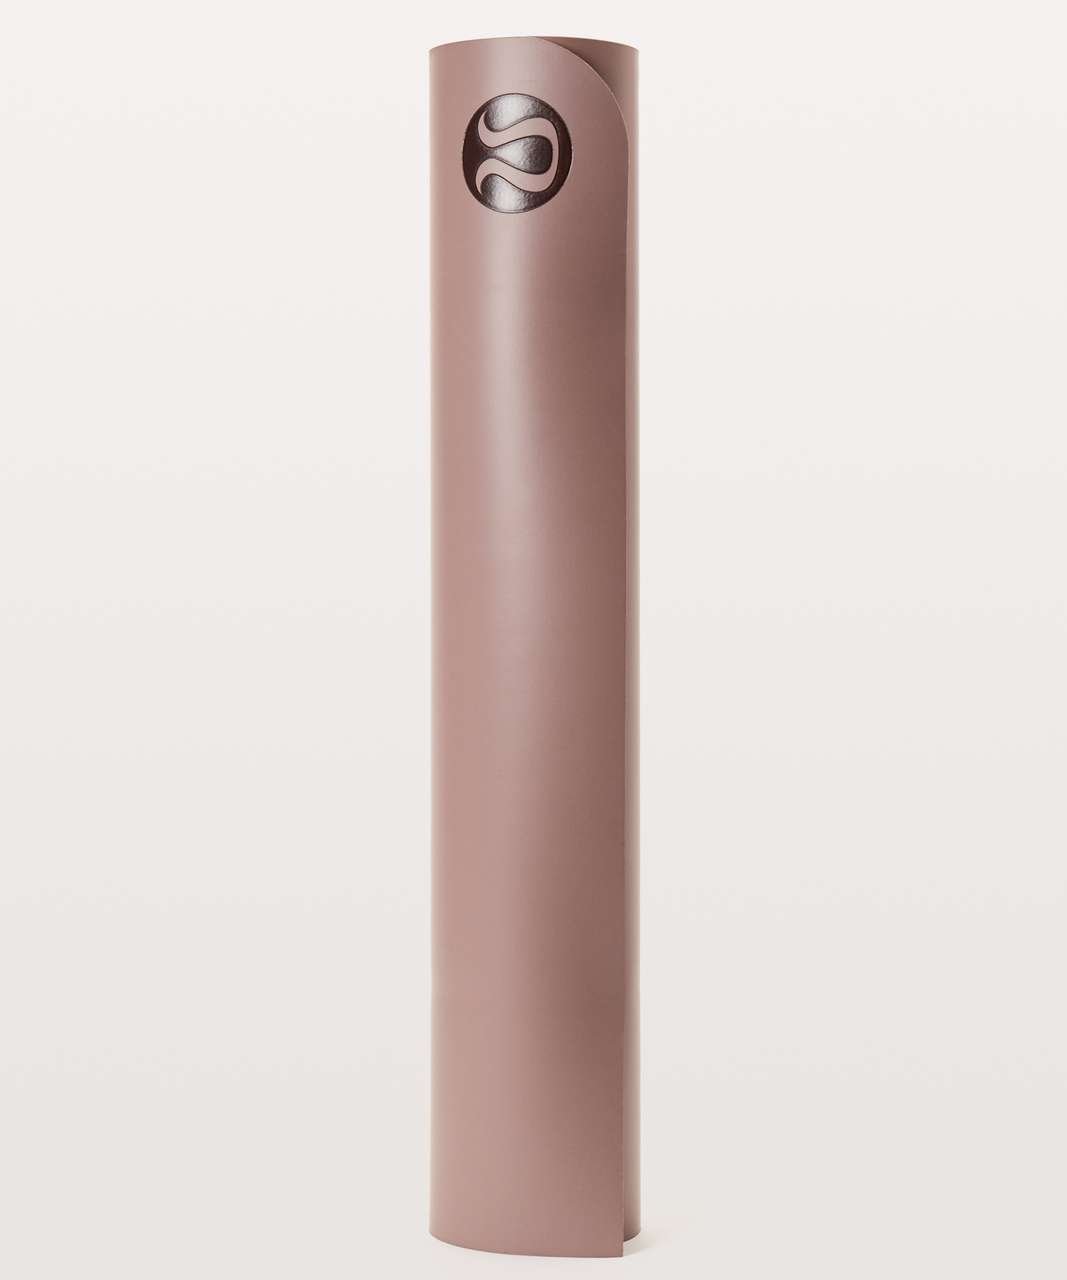 Lululemon The Reversible Mat 5mm - Misty Mauve / Porcelain Pink (First Release)